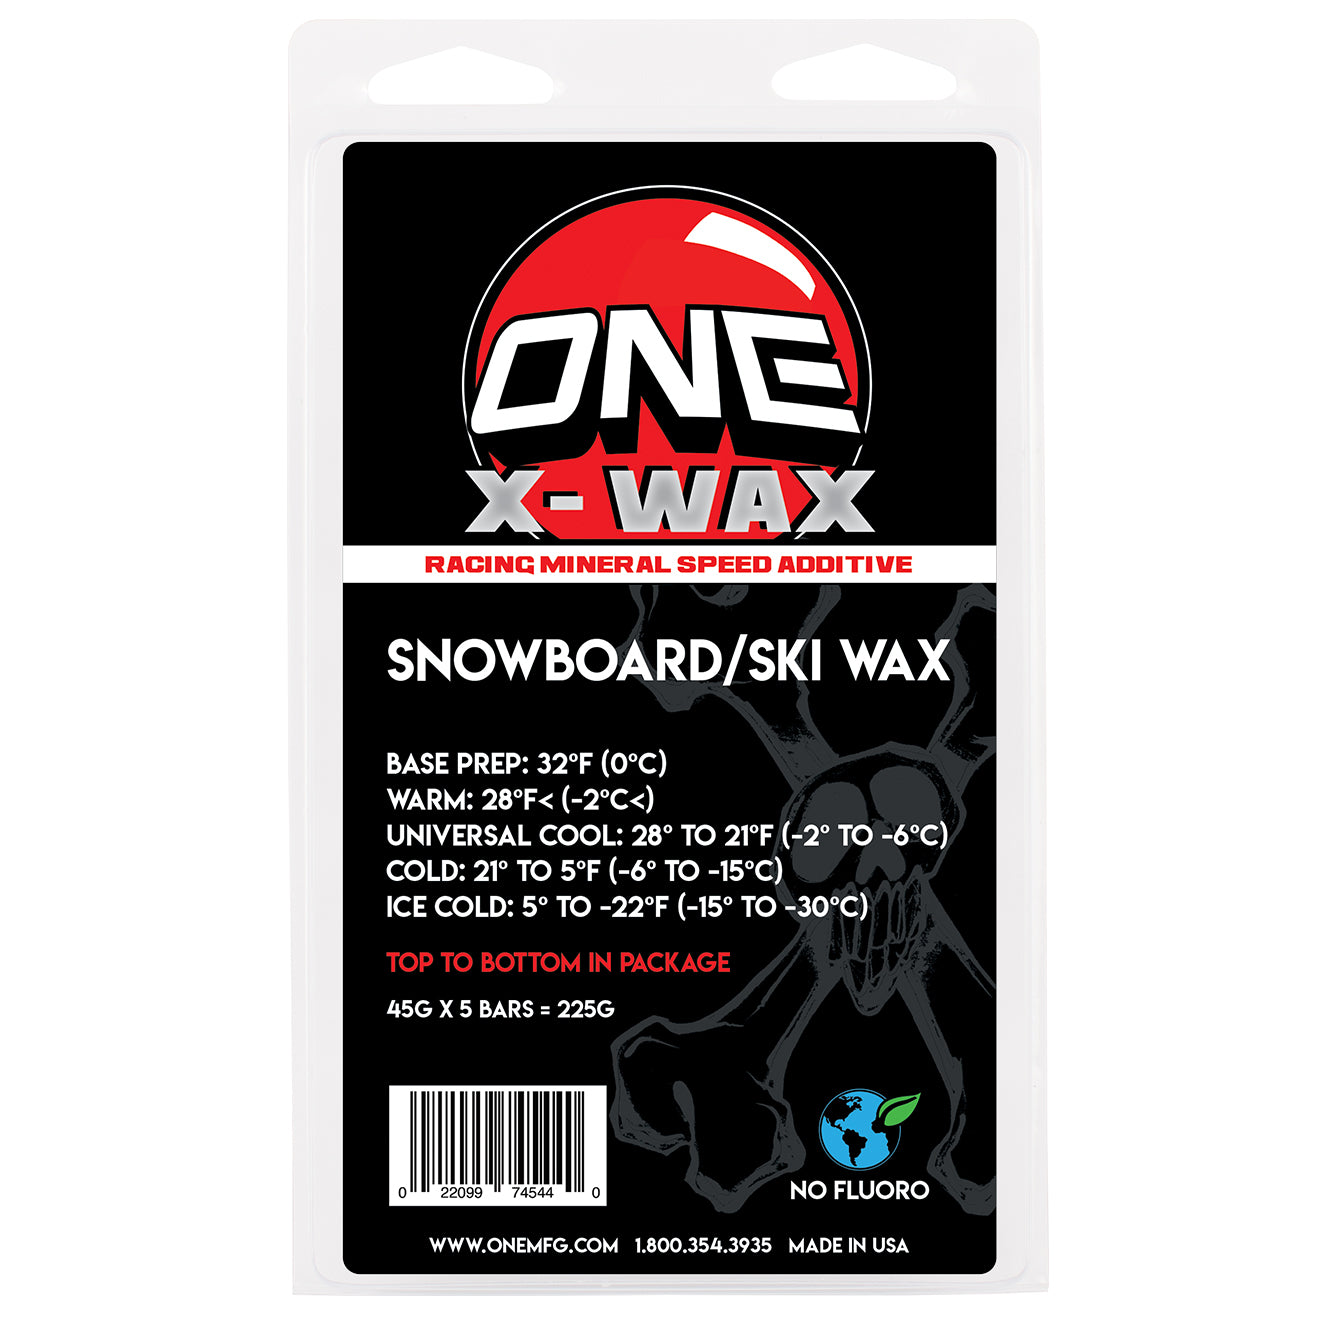 X-Wax 5-Pack Racing Wax  Snowboard Wax / Ski Wax Mineral Speed Additive Formulas